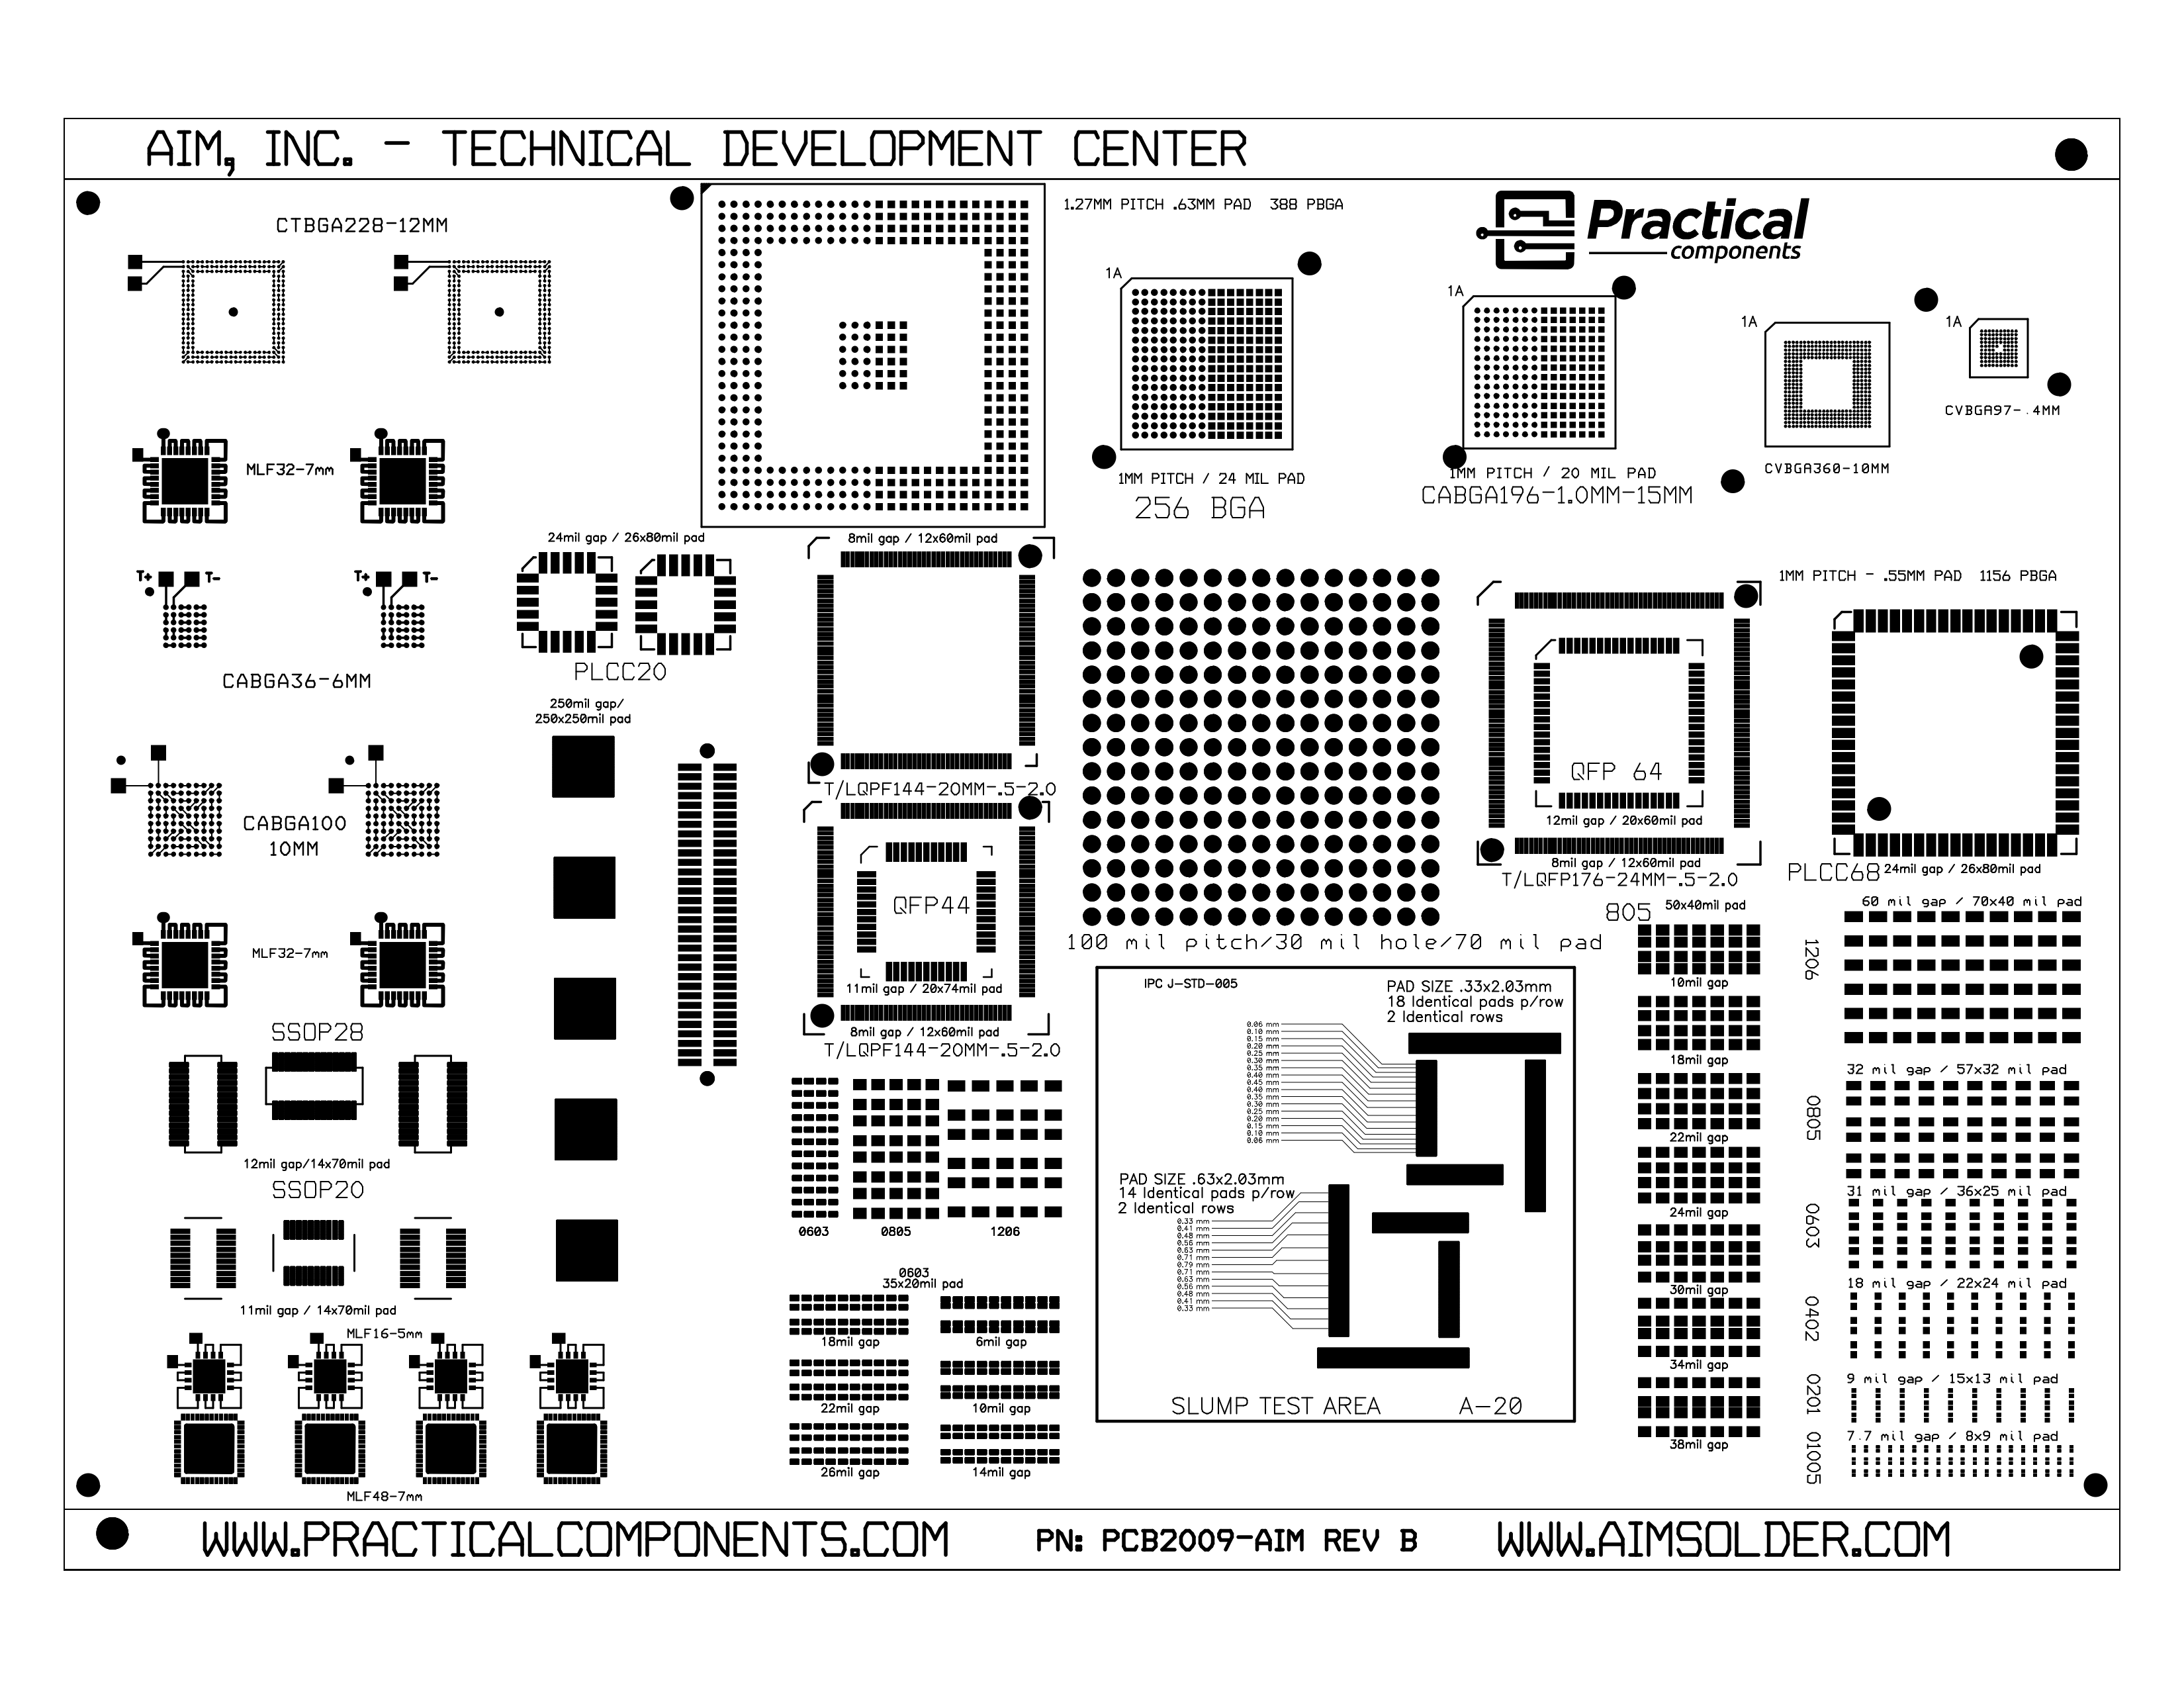 PC2009 Rev B AIM Solder Print Test Board and Kit